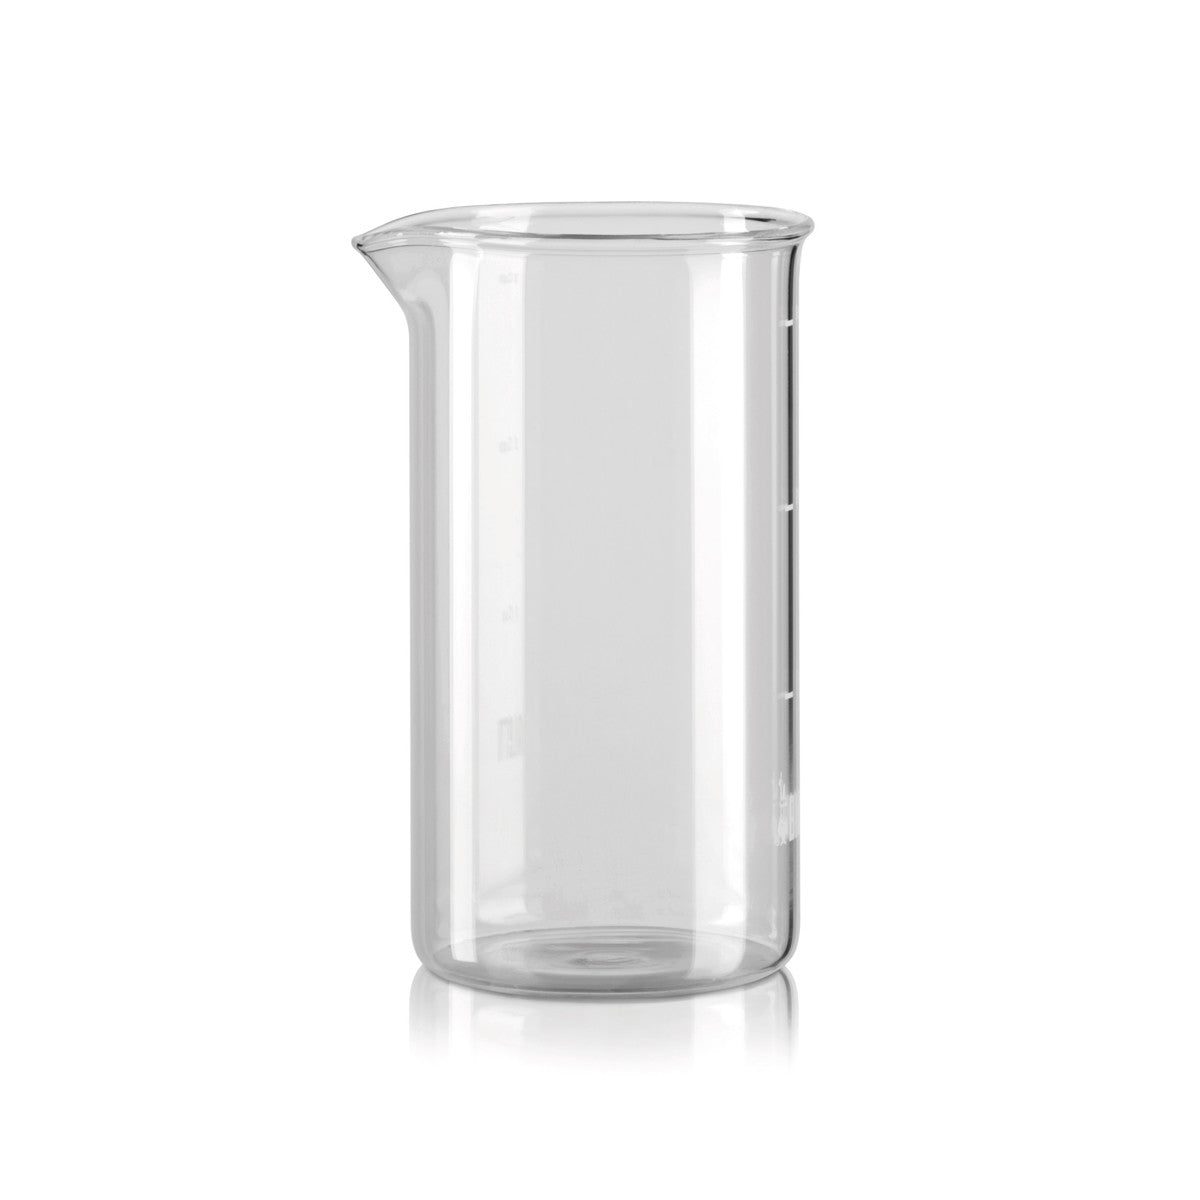 SPARE GLASS 0.35 L BIALETTI FRENCH PRESS